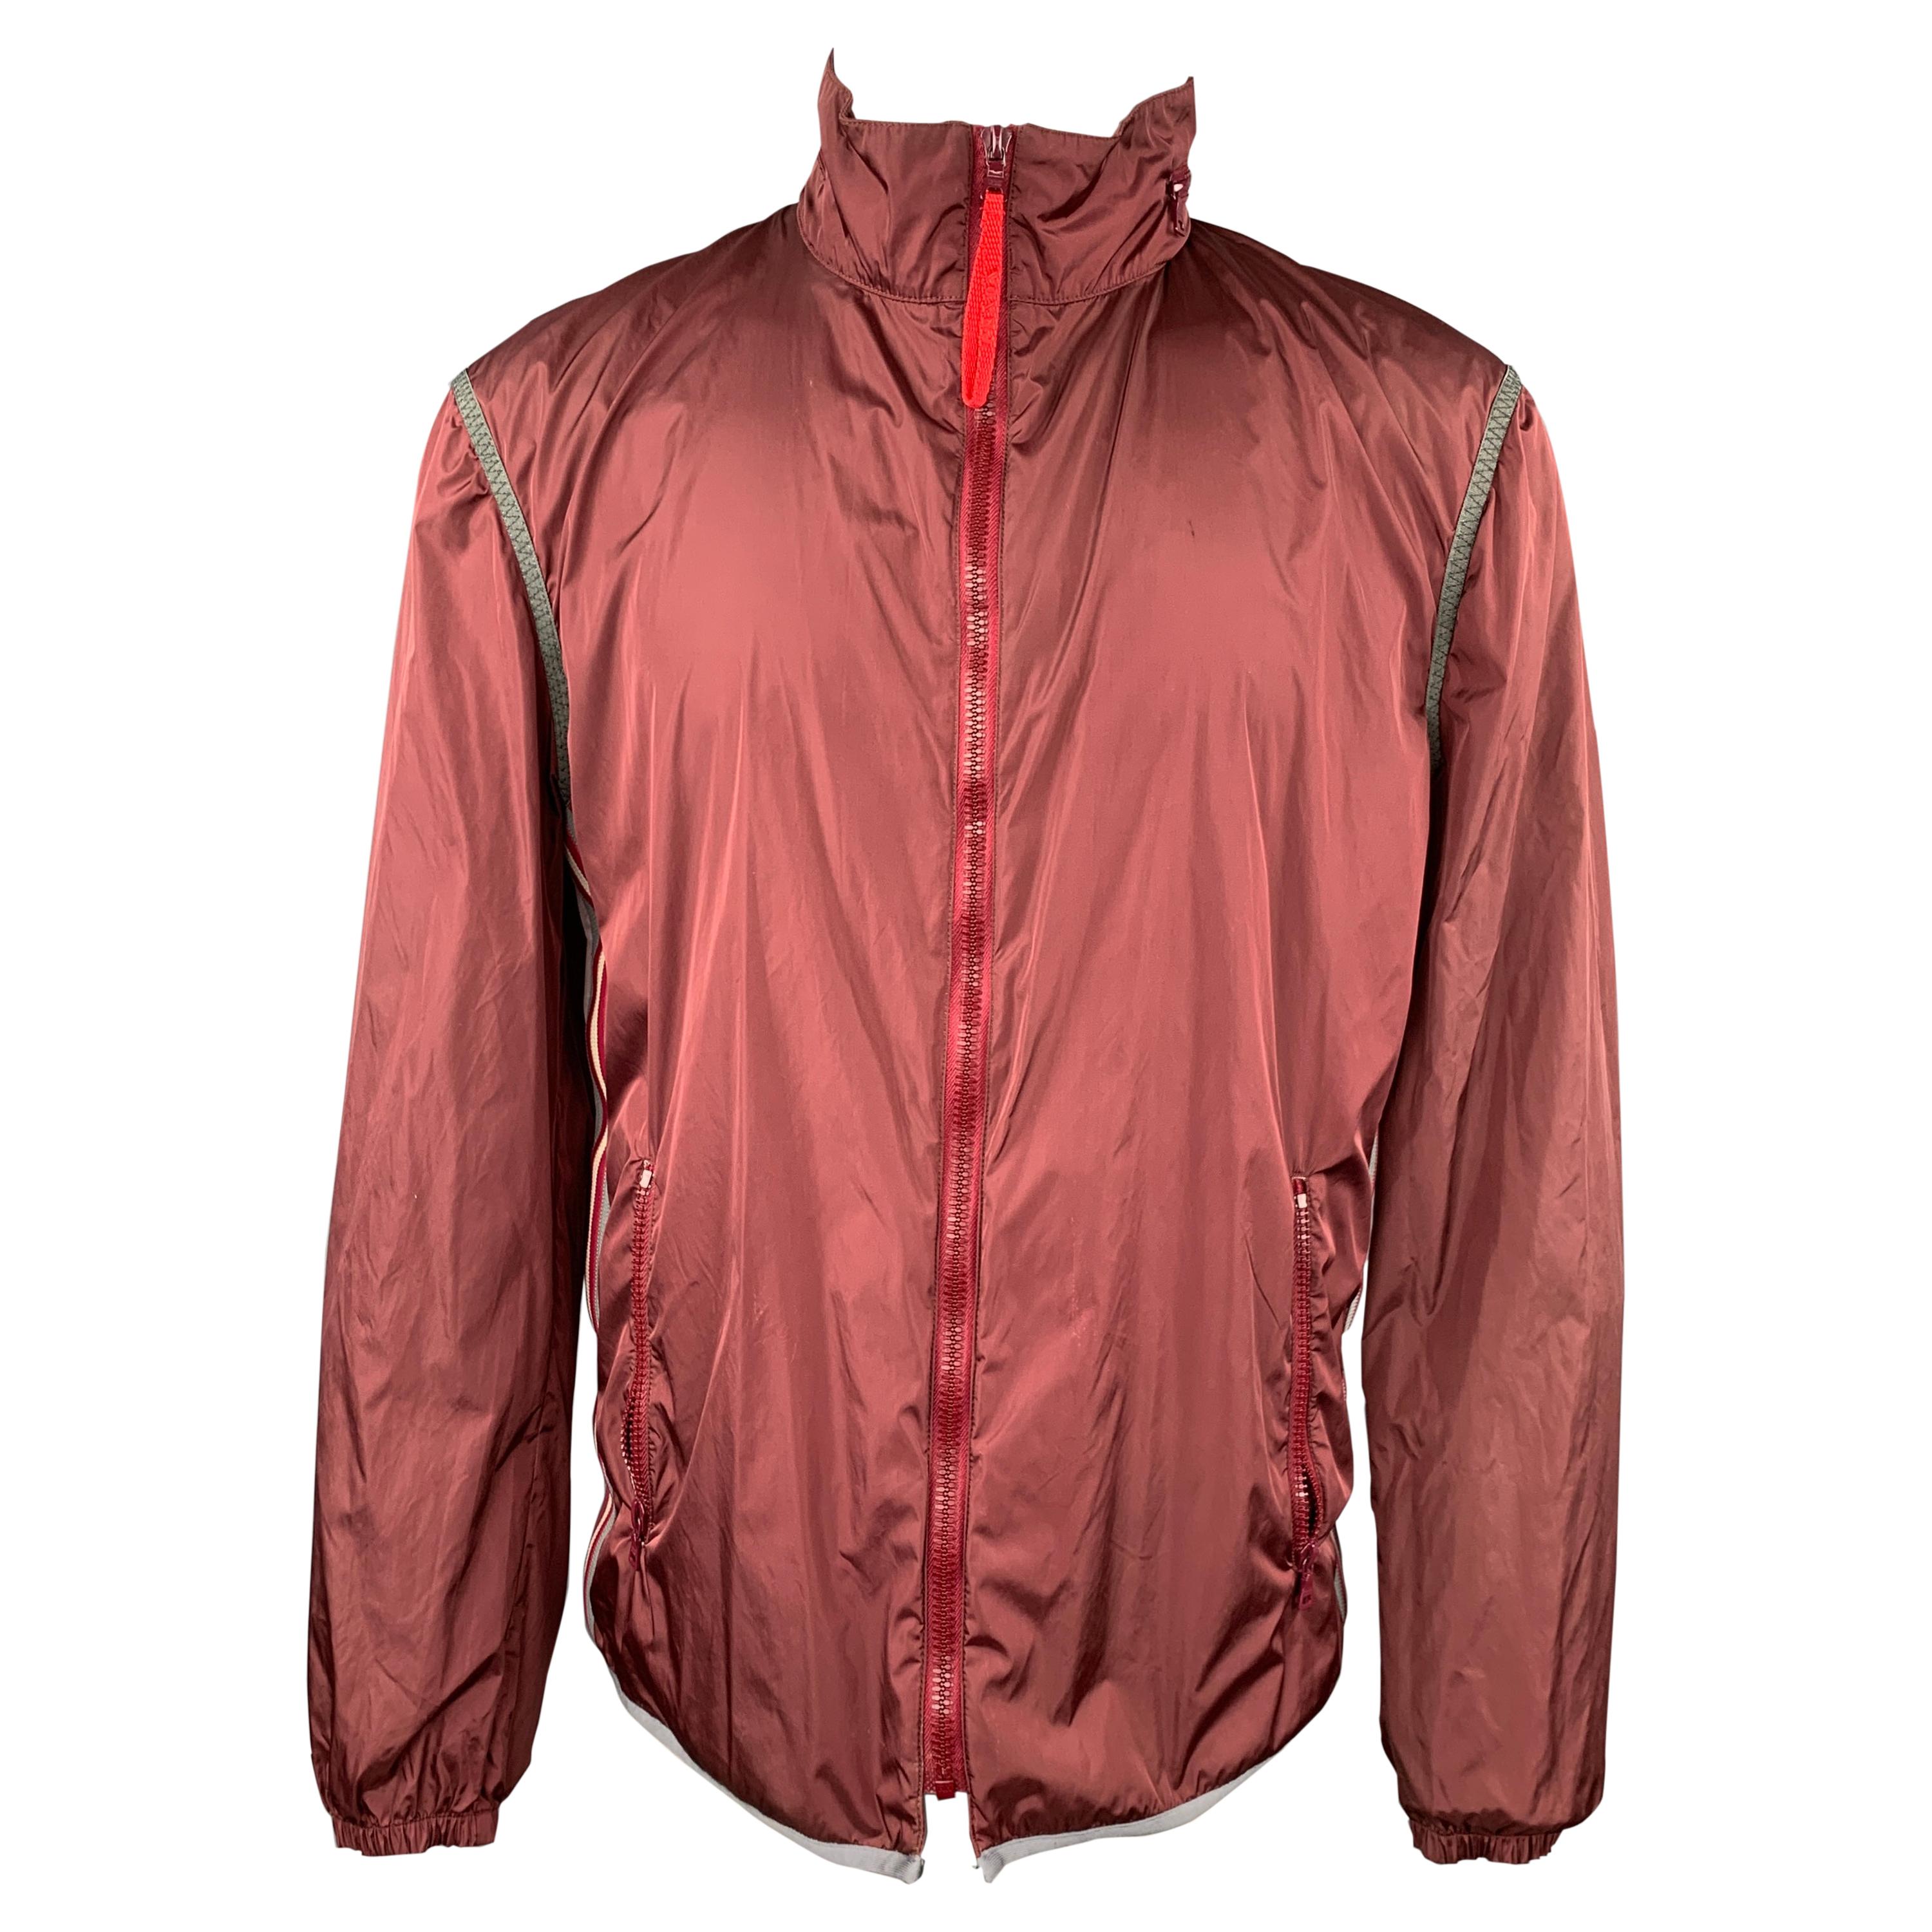 PRADA SPORT Size 40 Burgundy & Pink Color Block Nylon Hooded Jacket